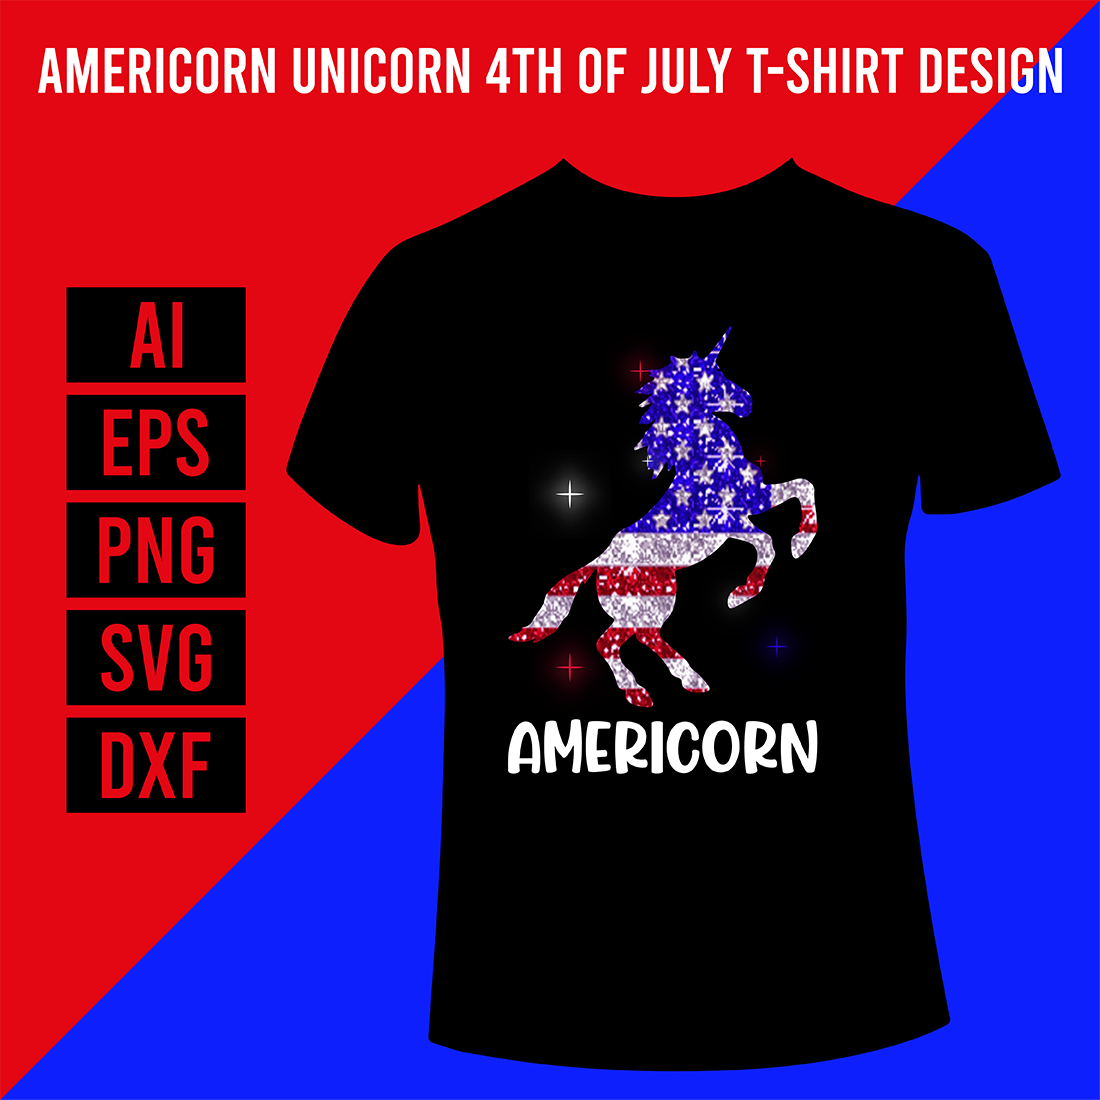 Americorn Unicorn 4th of July T-Shirt Design cover image.